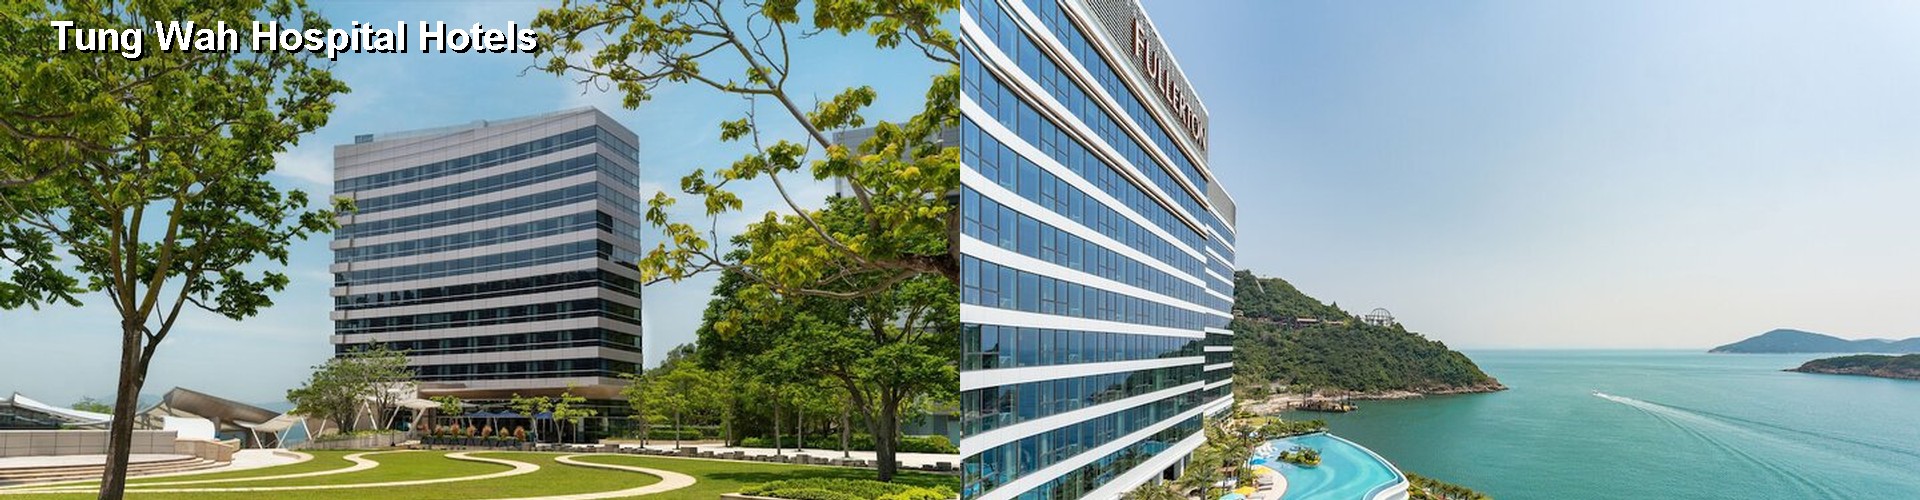 5 Best Hotels near Tung Wah Hospital